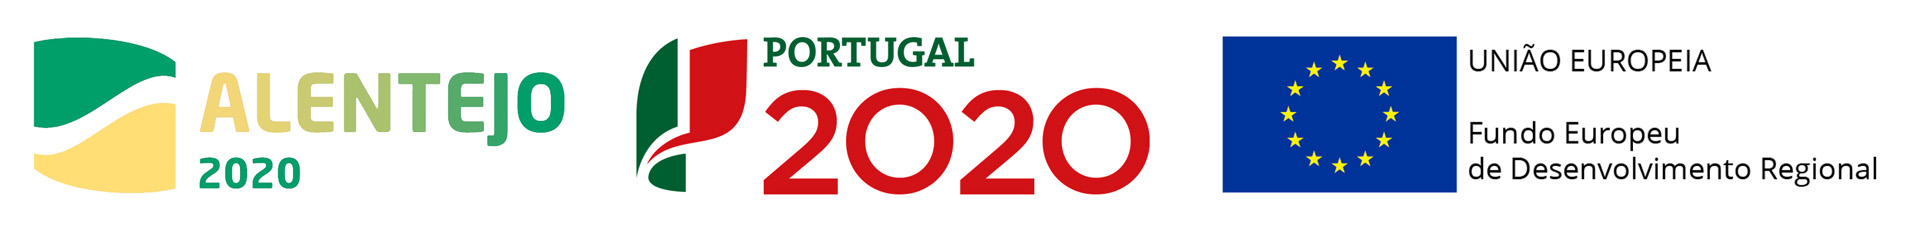 Alentejo 2020 - Portugal 2020 - UE Fundo Europeu